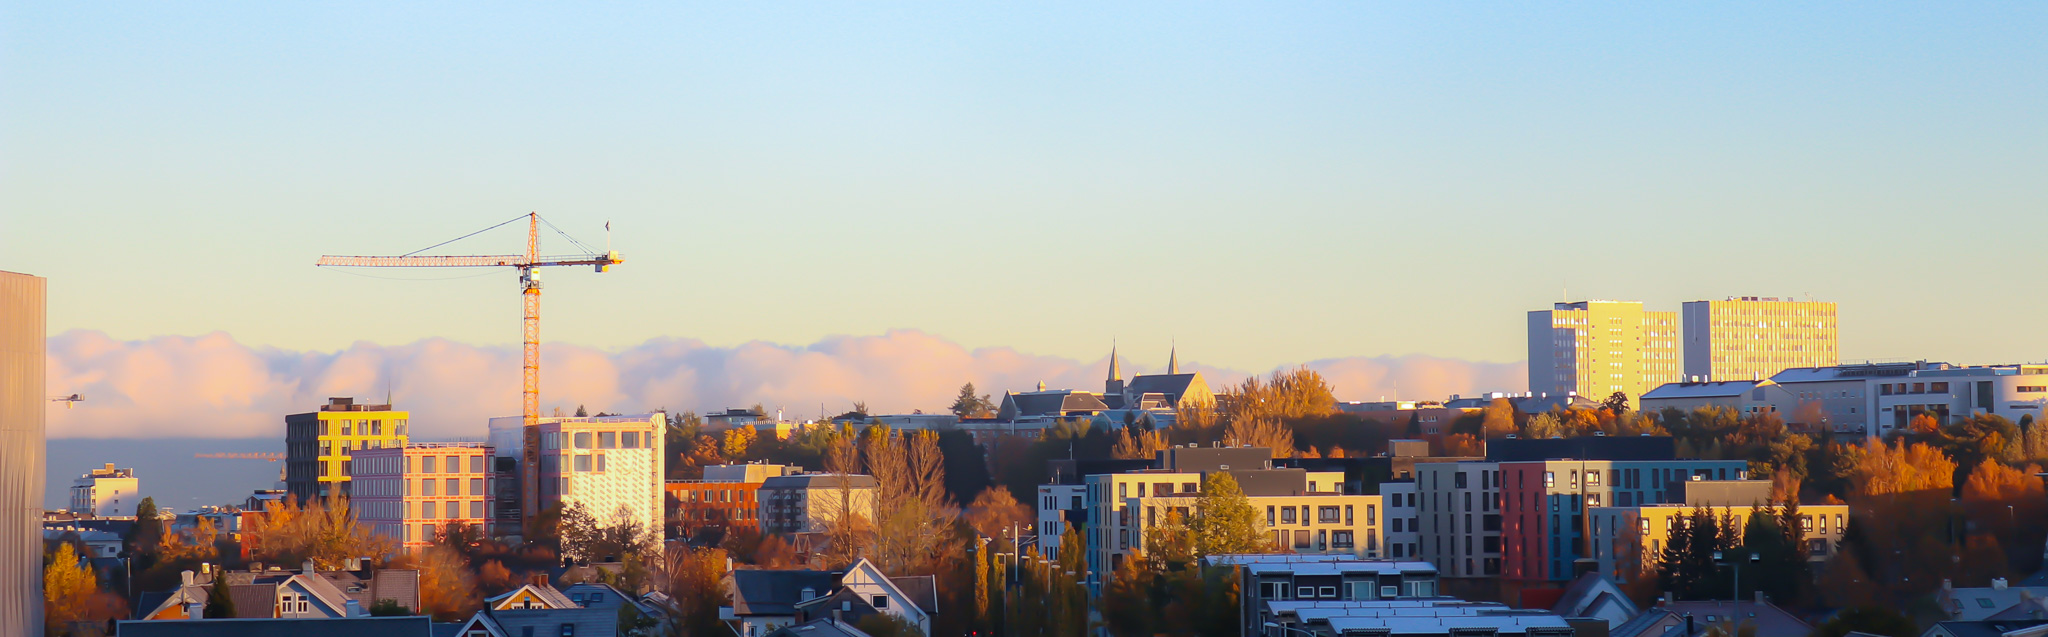 Utsikt over Trondheim (bilde)